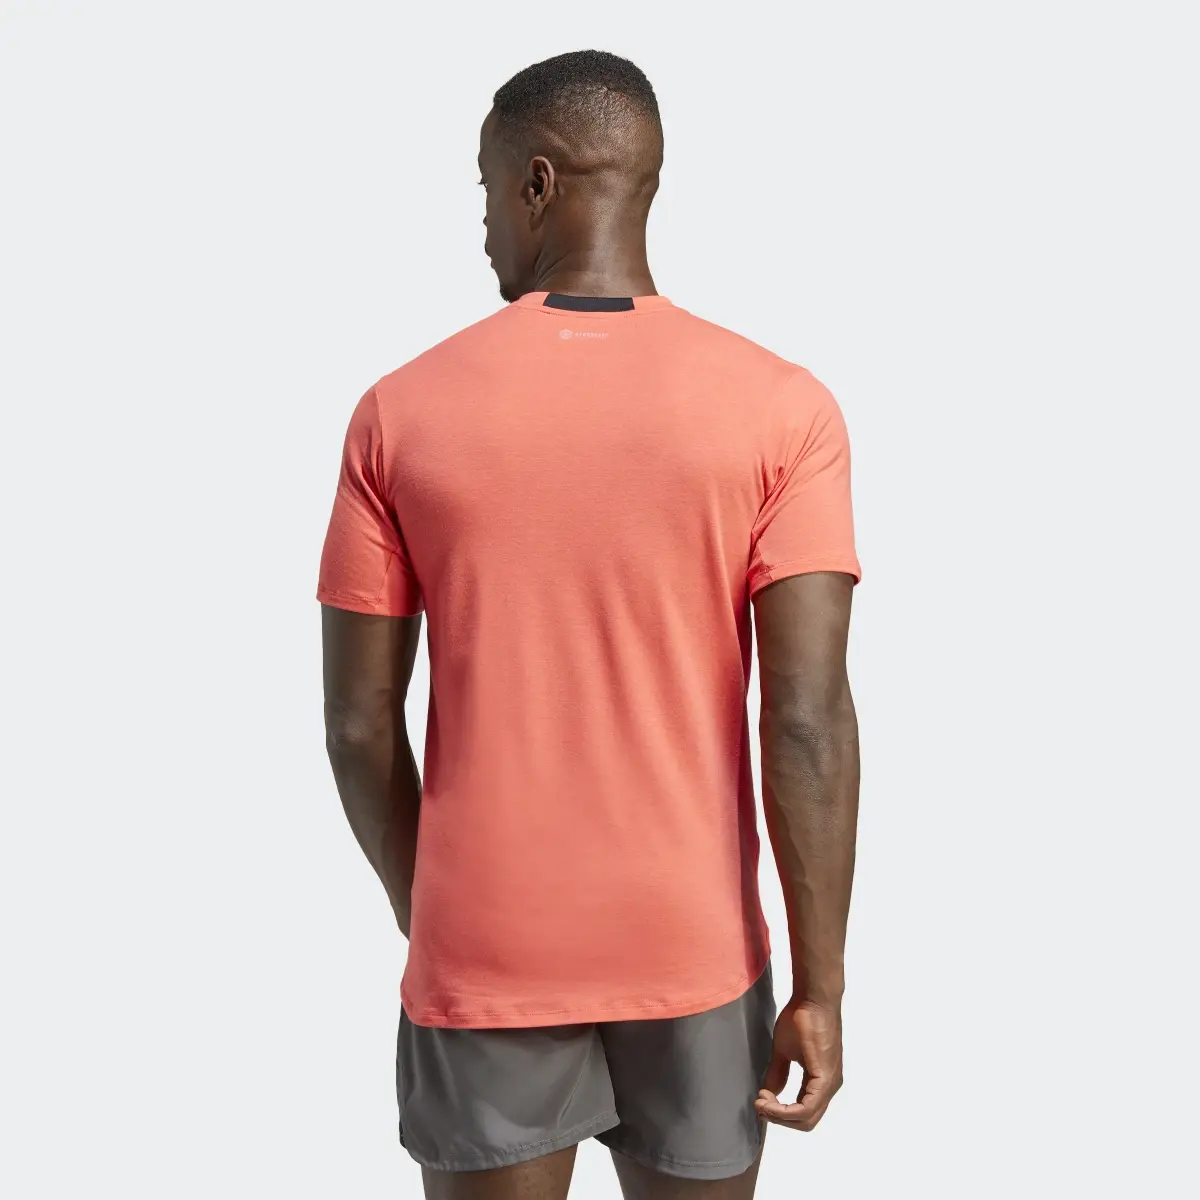 Adidas Designed for Training T-Shirt. 2